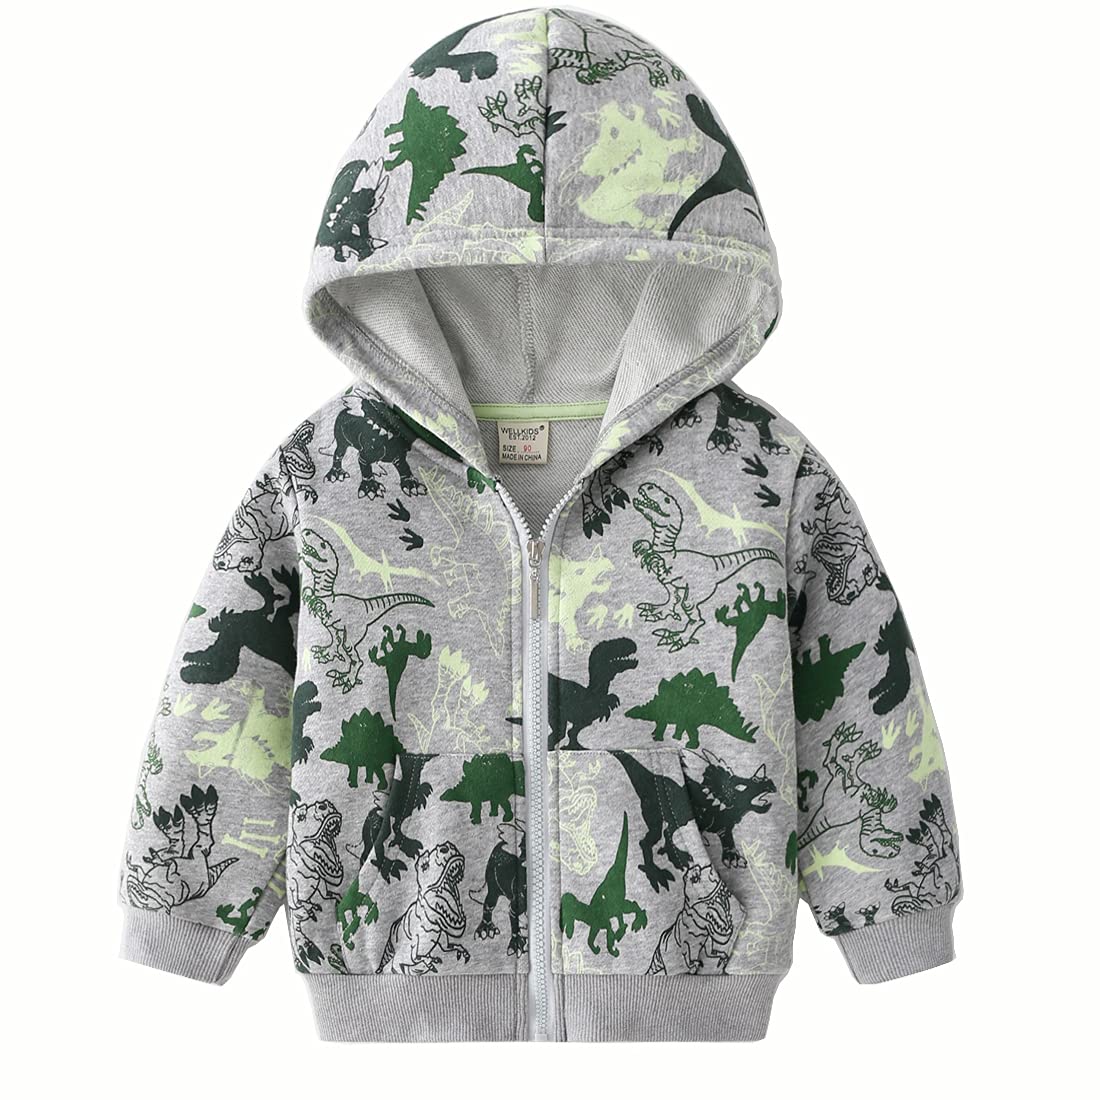 NautySaurs Boys Zip-up Dinosaur Hoodies Toddler Light Jackets Zipper Sweatshirt 2 Years